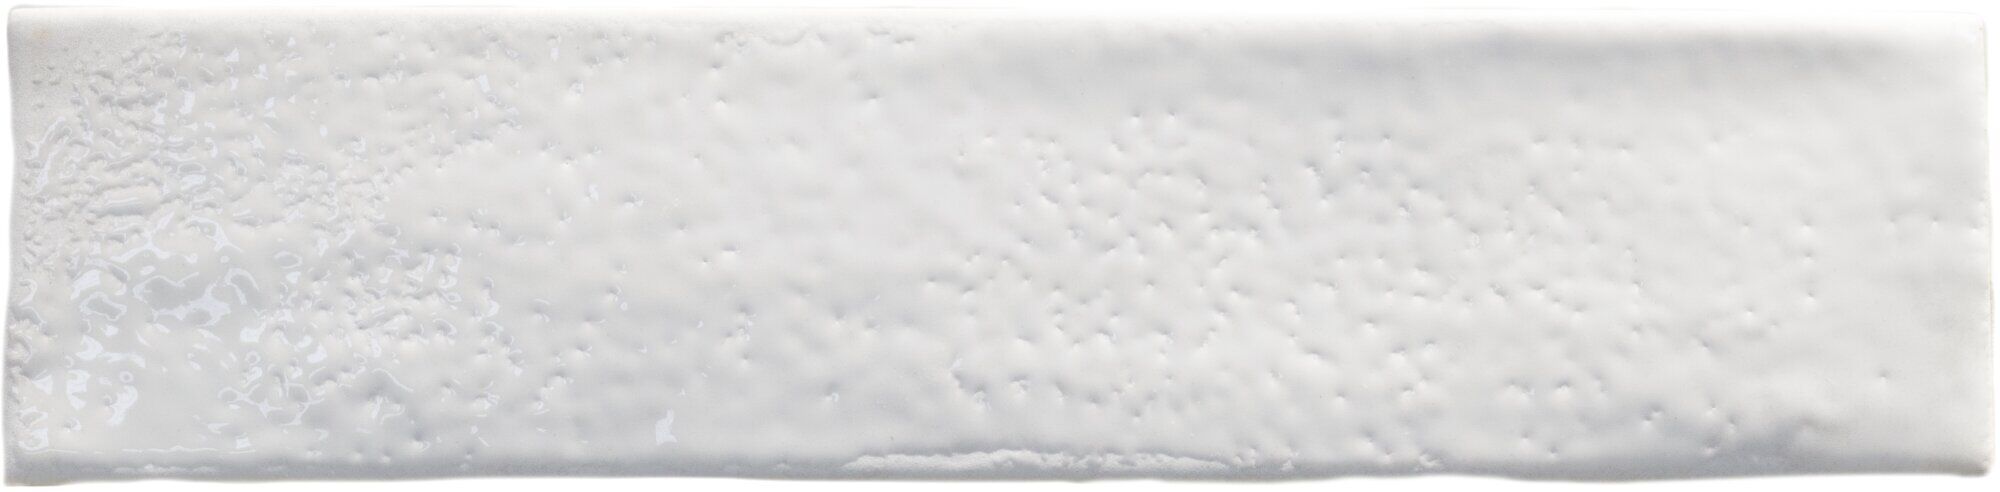 Керамическая плитка Керамин Harmony Sunset White Белая Глянцевая Настенная плитка 6x25